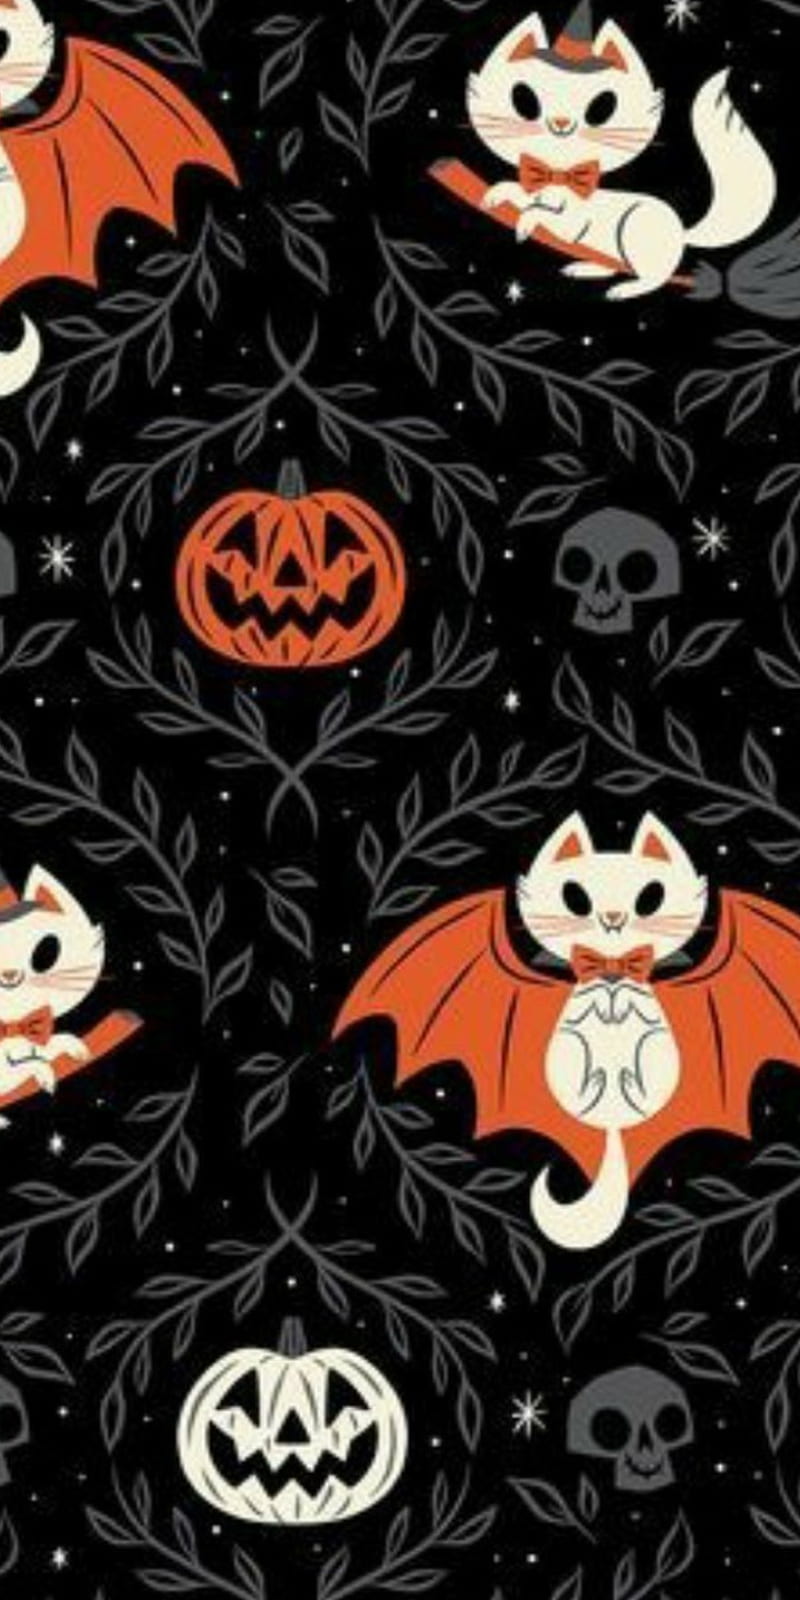 The spooky halloween bat wallpaper background Stock Photo  Alamy